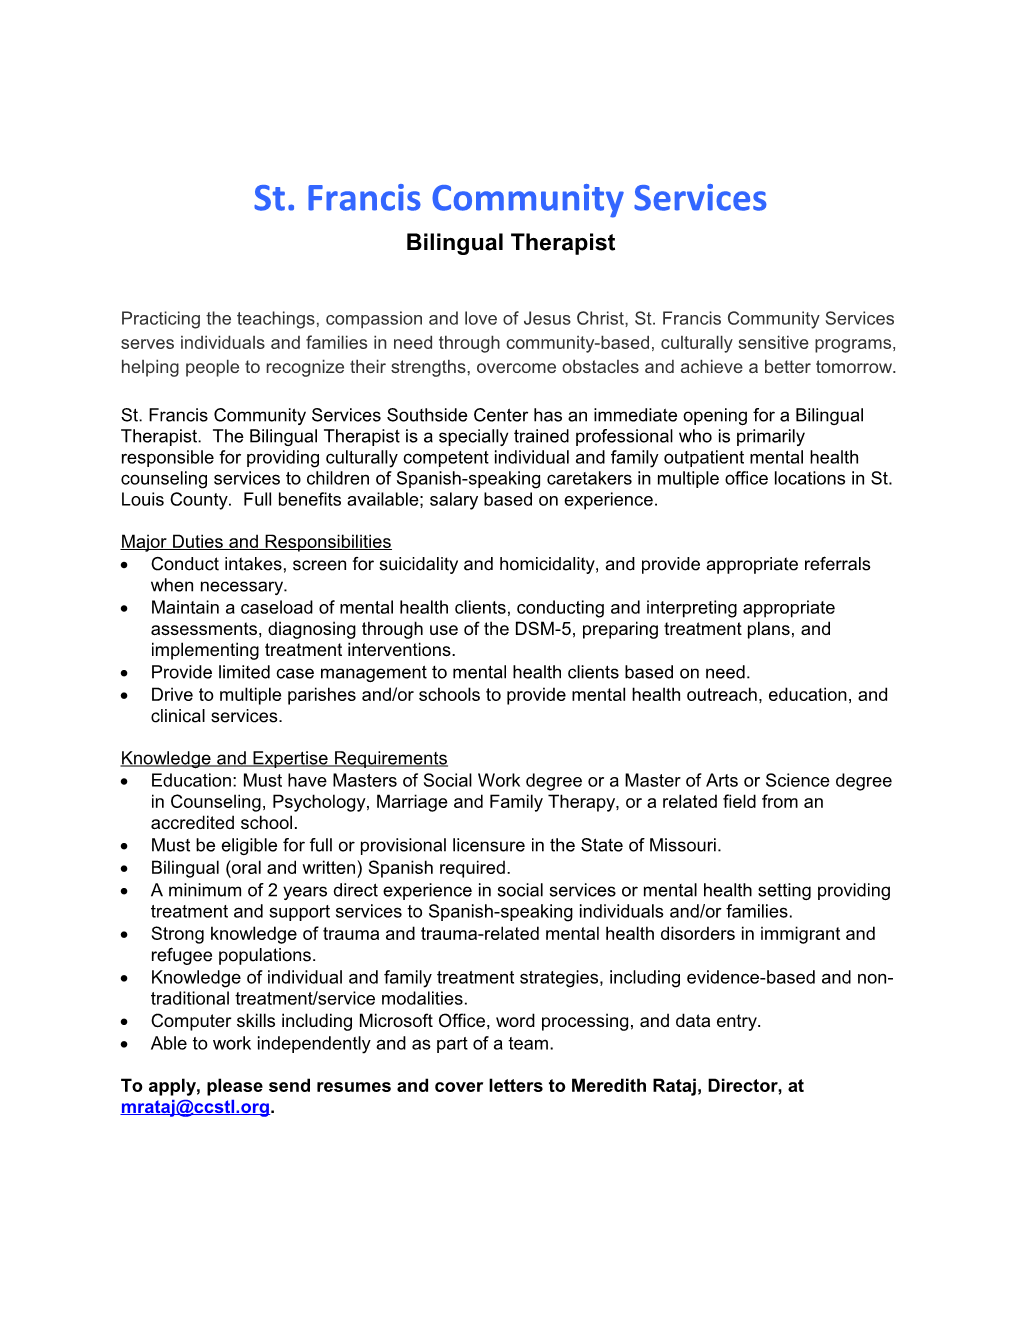 St. Francis Community Services